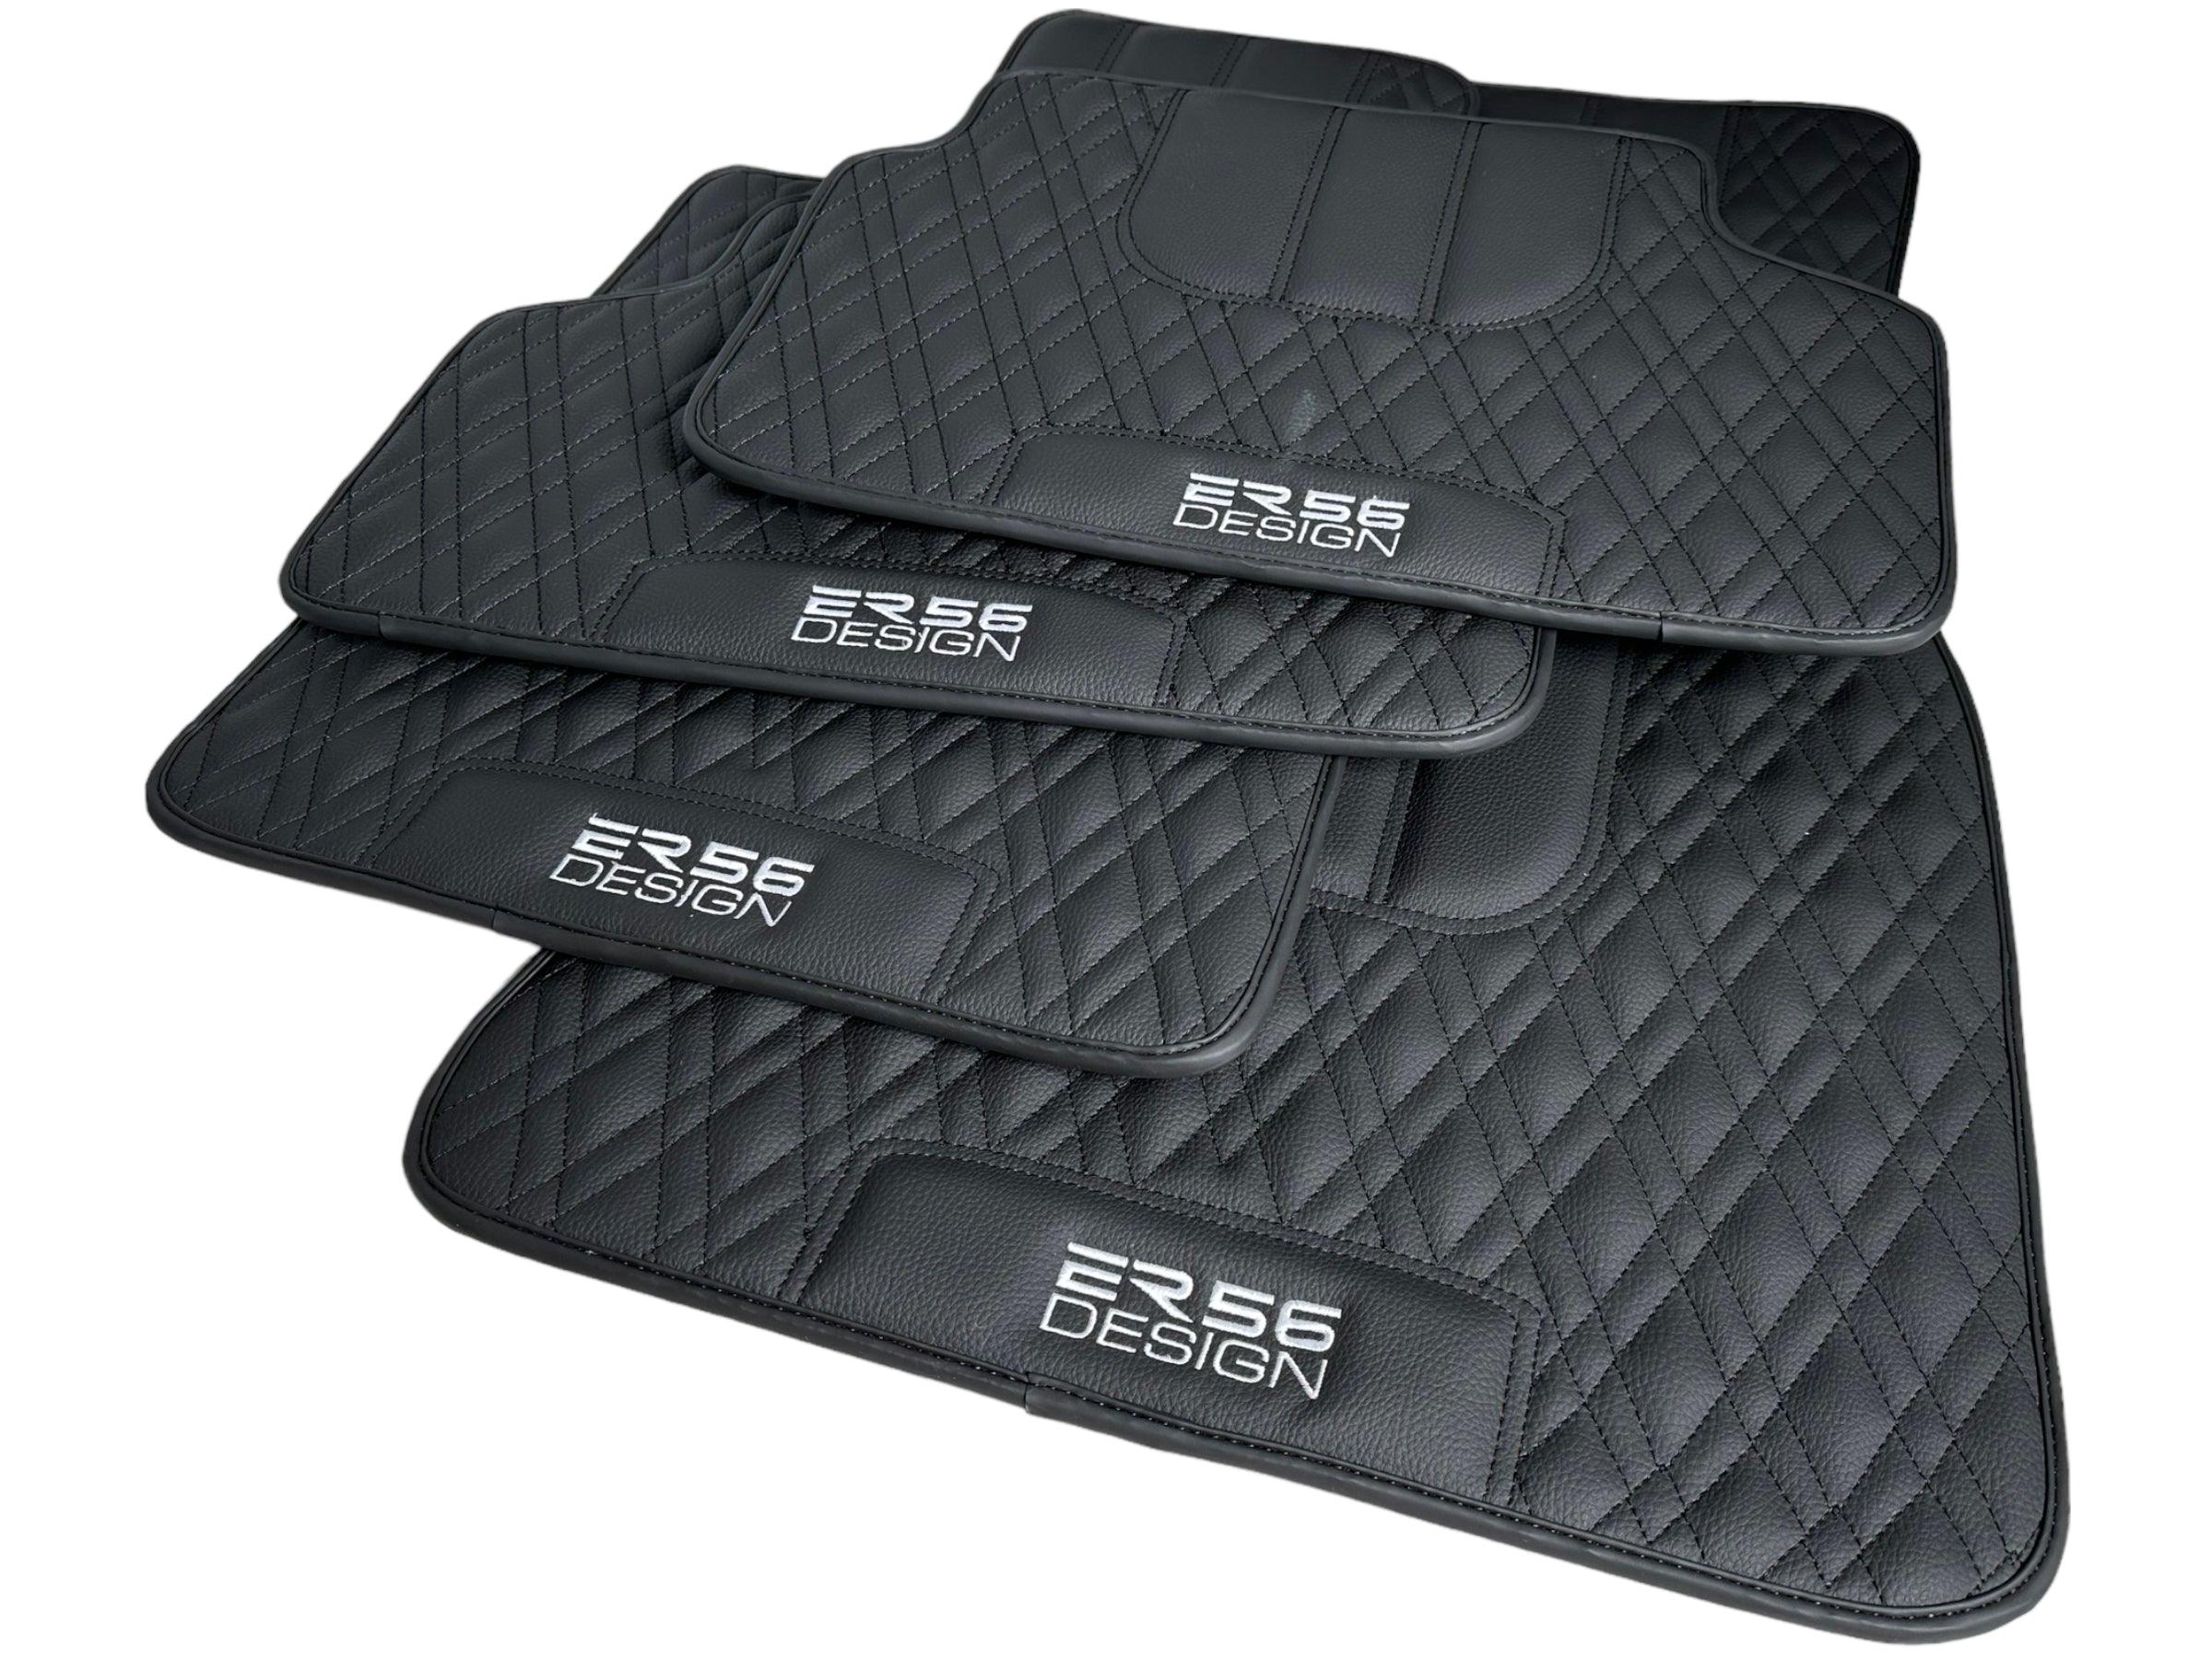 Floor Mats For BMW M4 Series F82 Black Leather Er56 Design - AutoWin